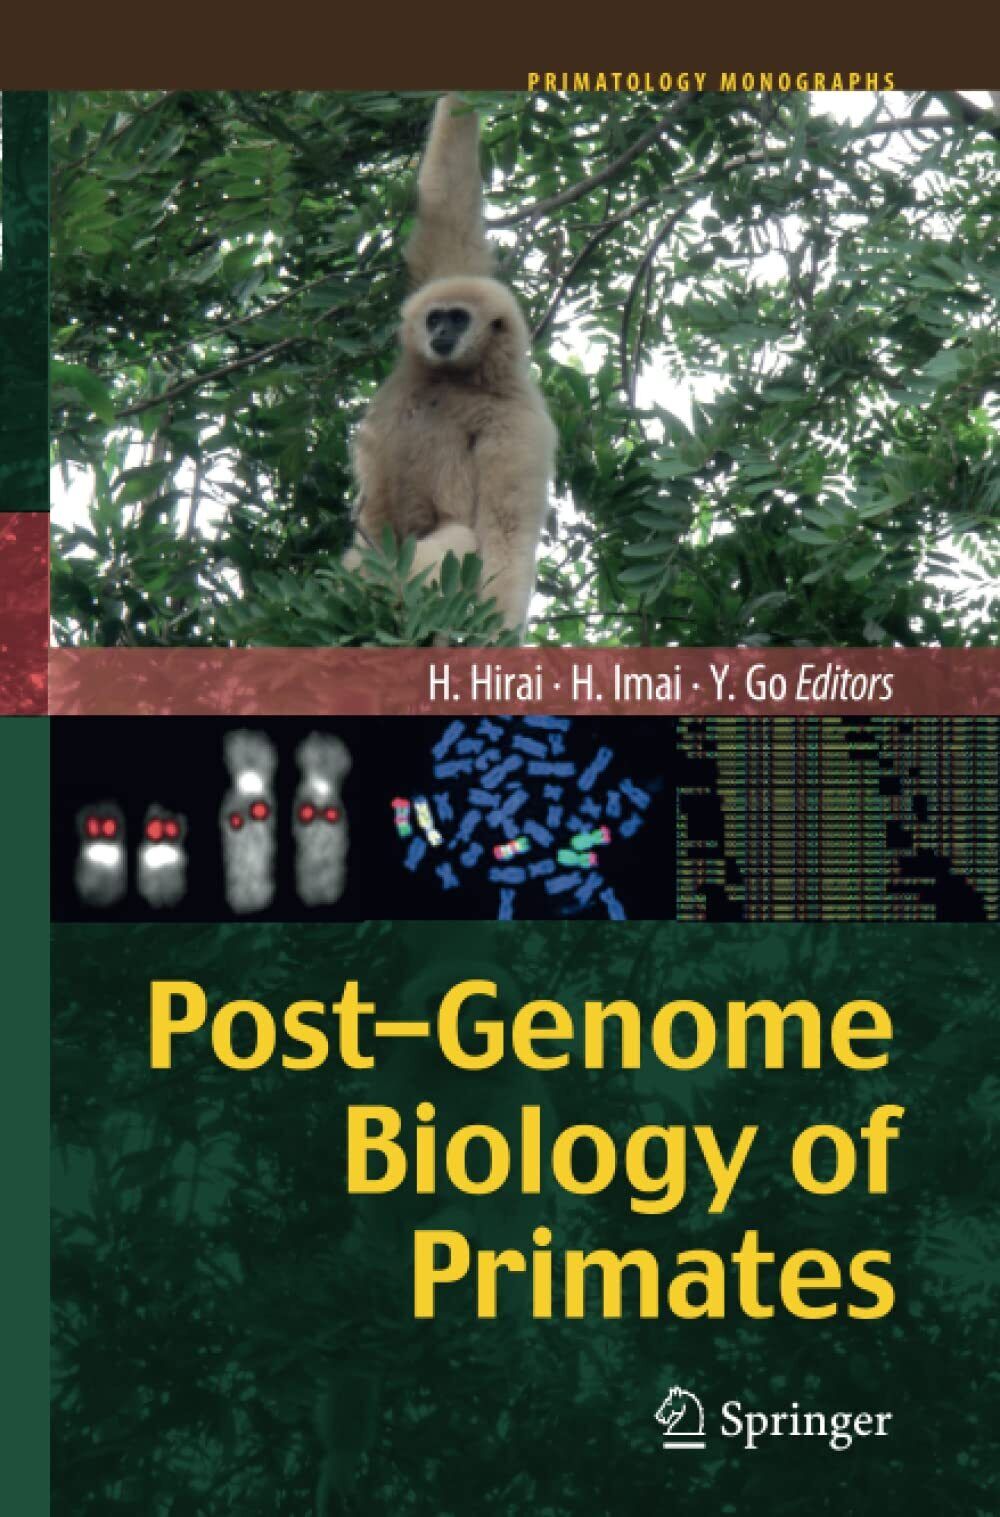 Post-Genome Biology of Primates - Hirohisa Hirai - Springer, 2014 libro usato